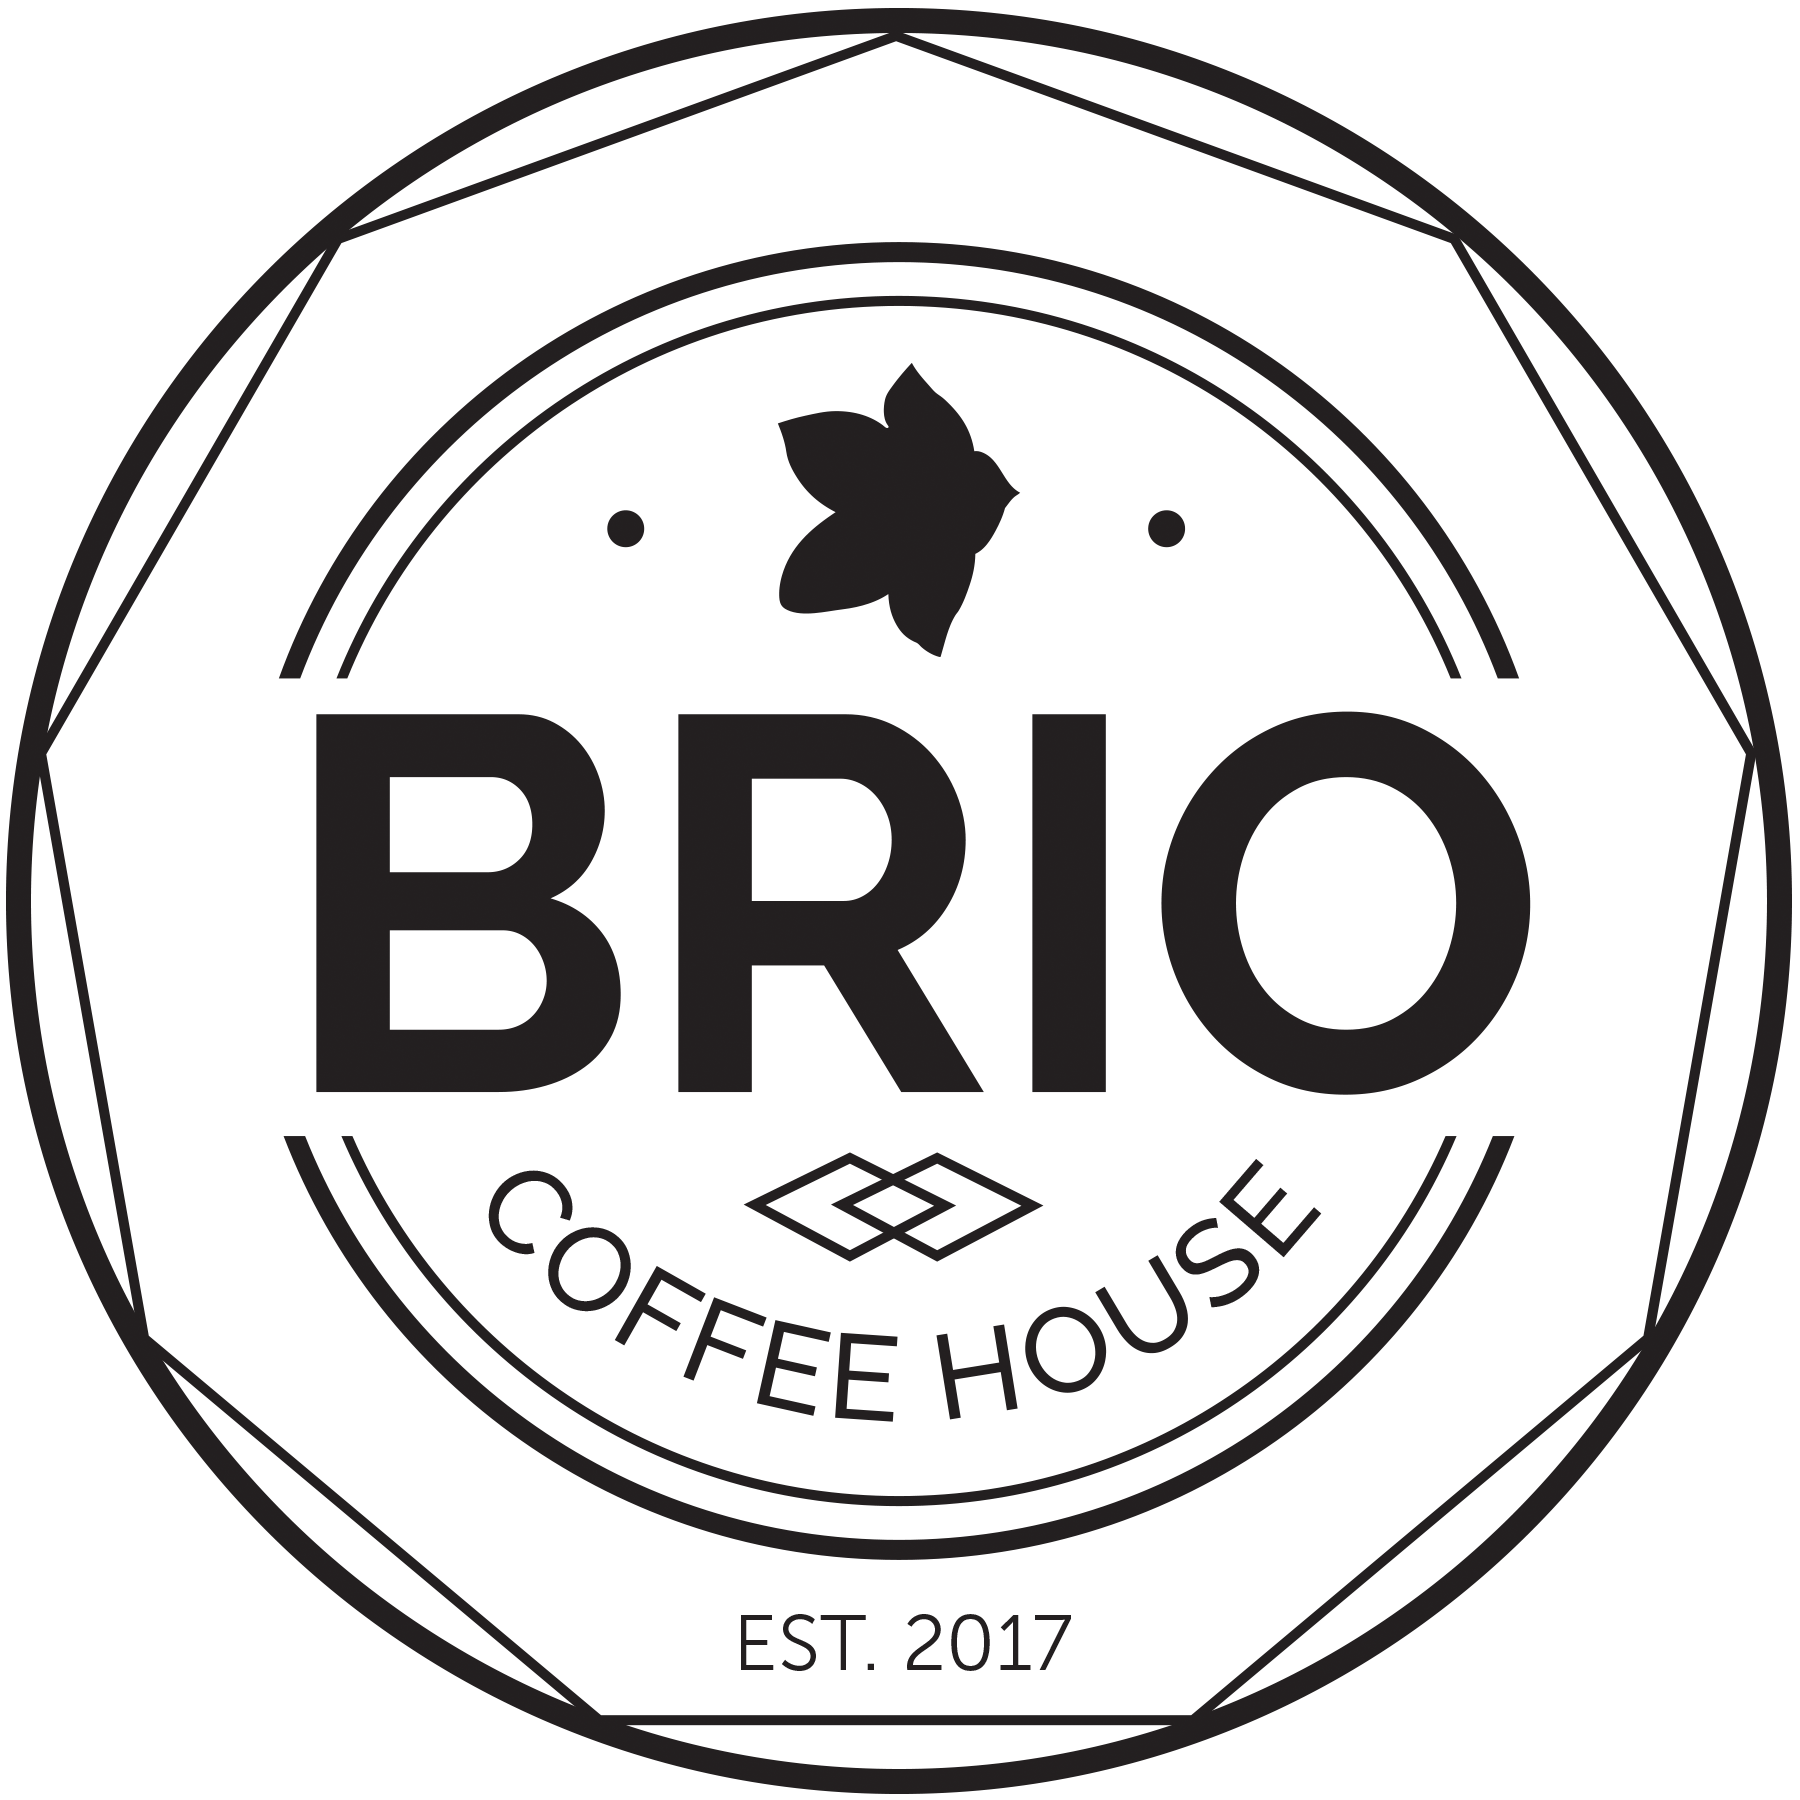 Brio Coffeehouse, Inc